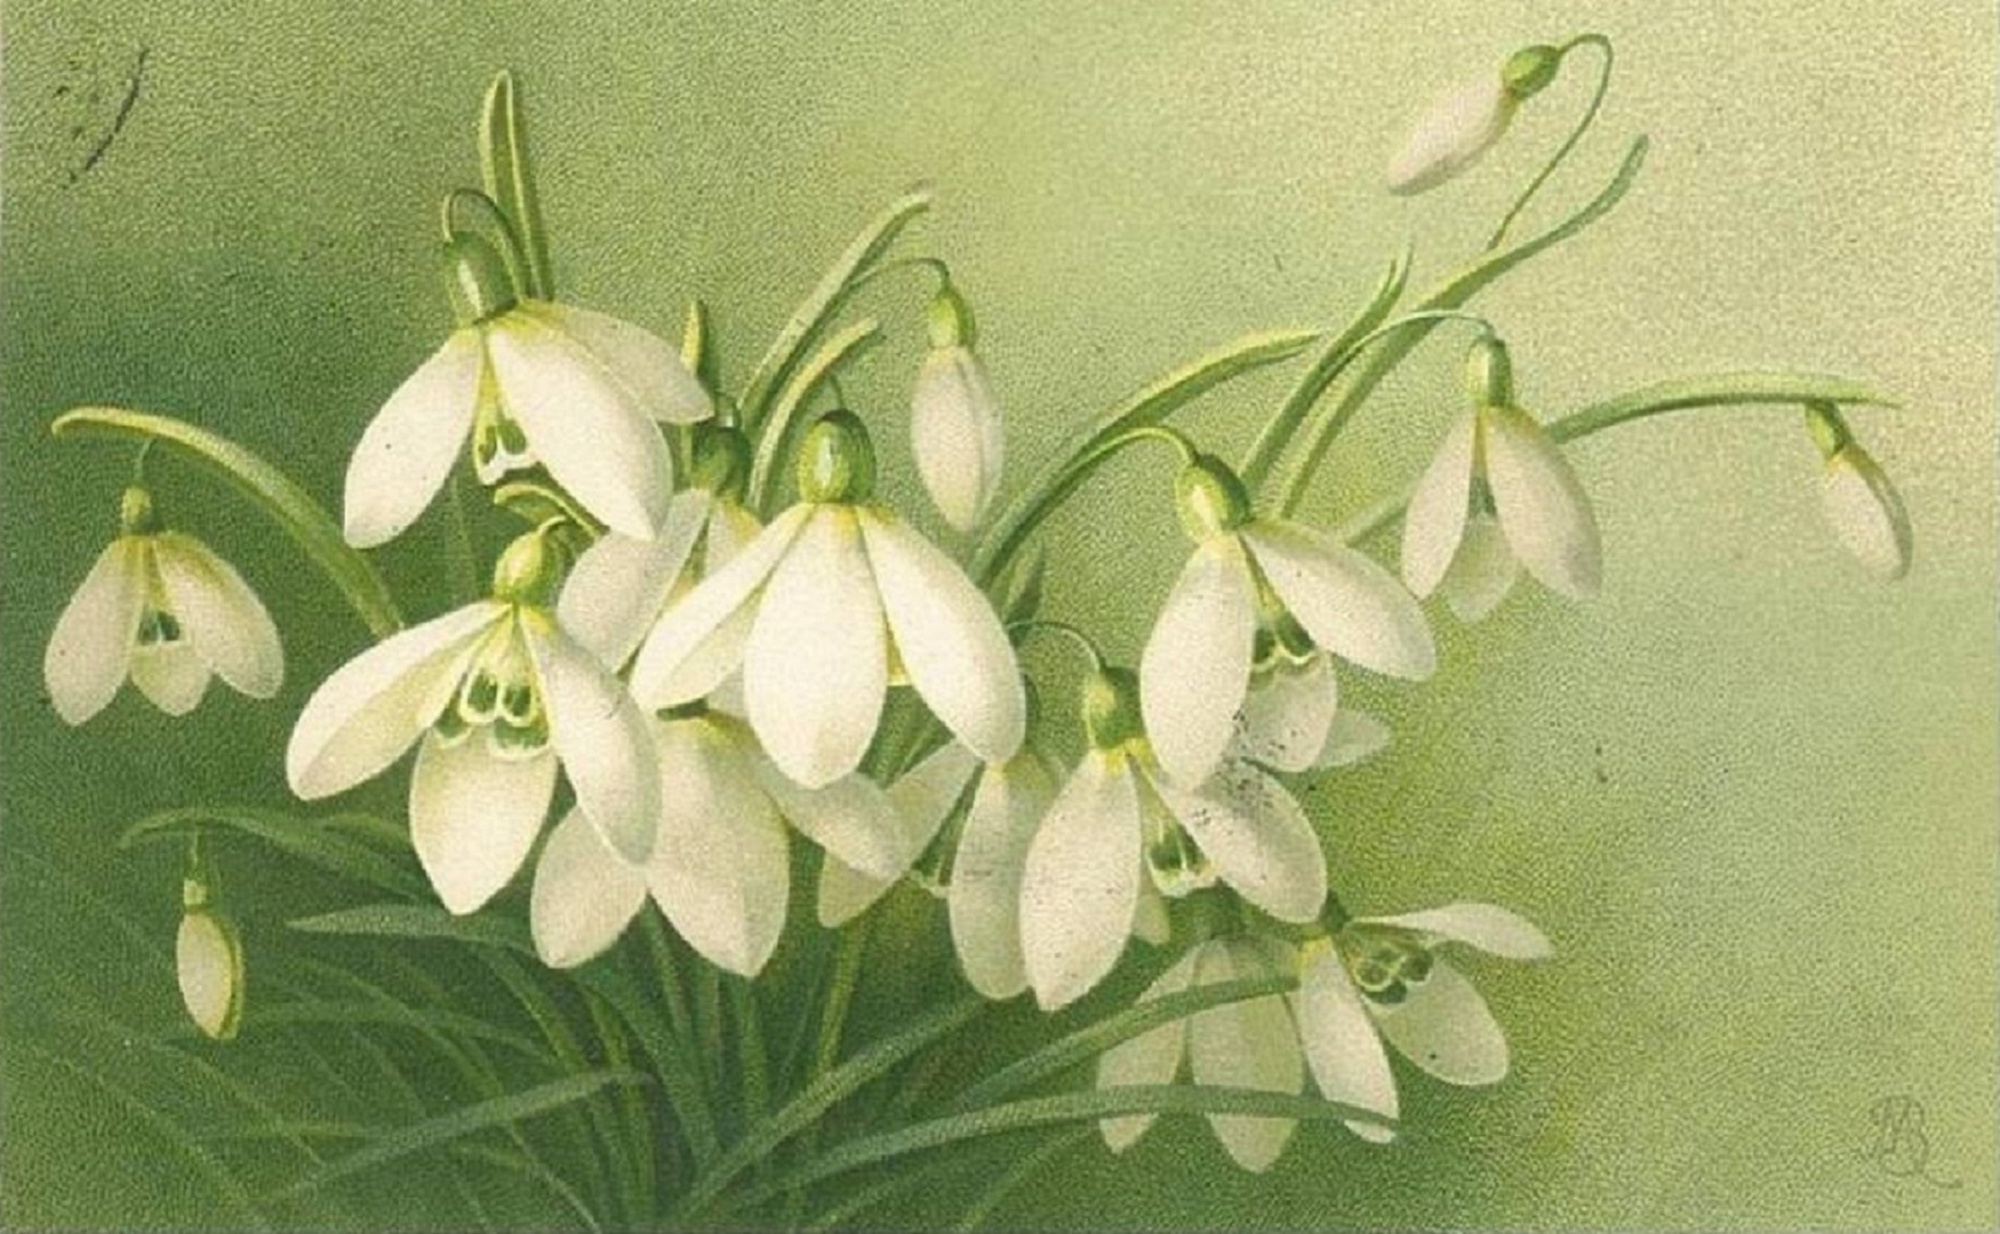 Snowdrop (Galanthus) botanical illustration by Kennet Kjell Johansson Hultman circa 1907.